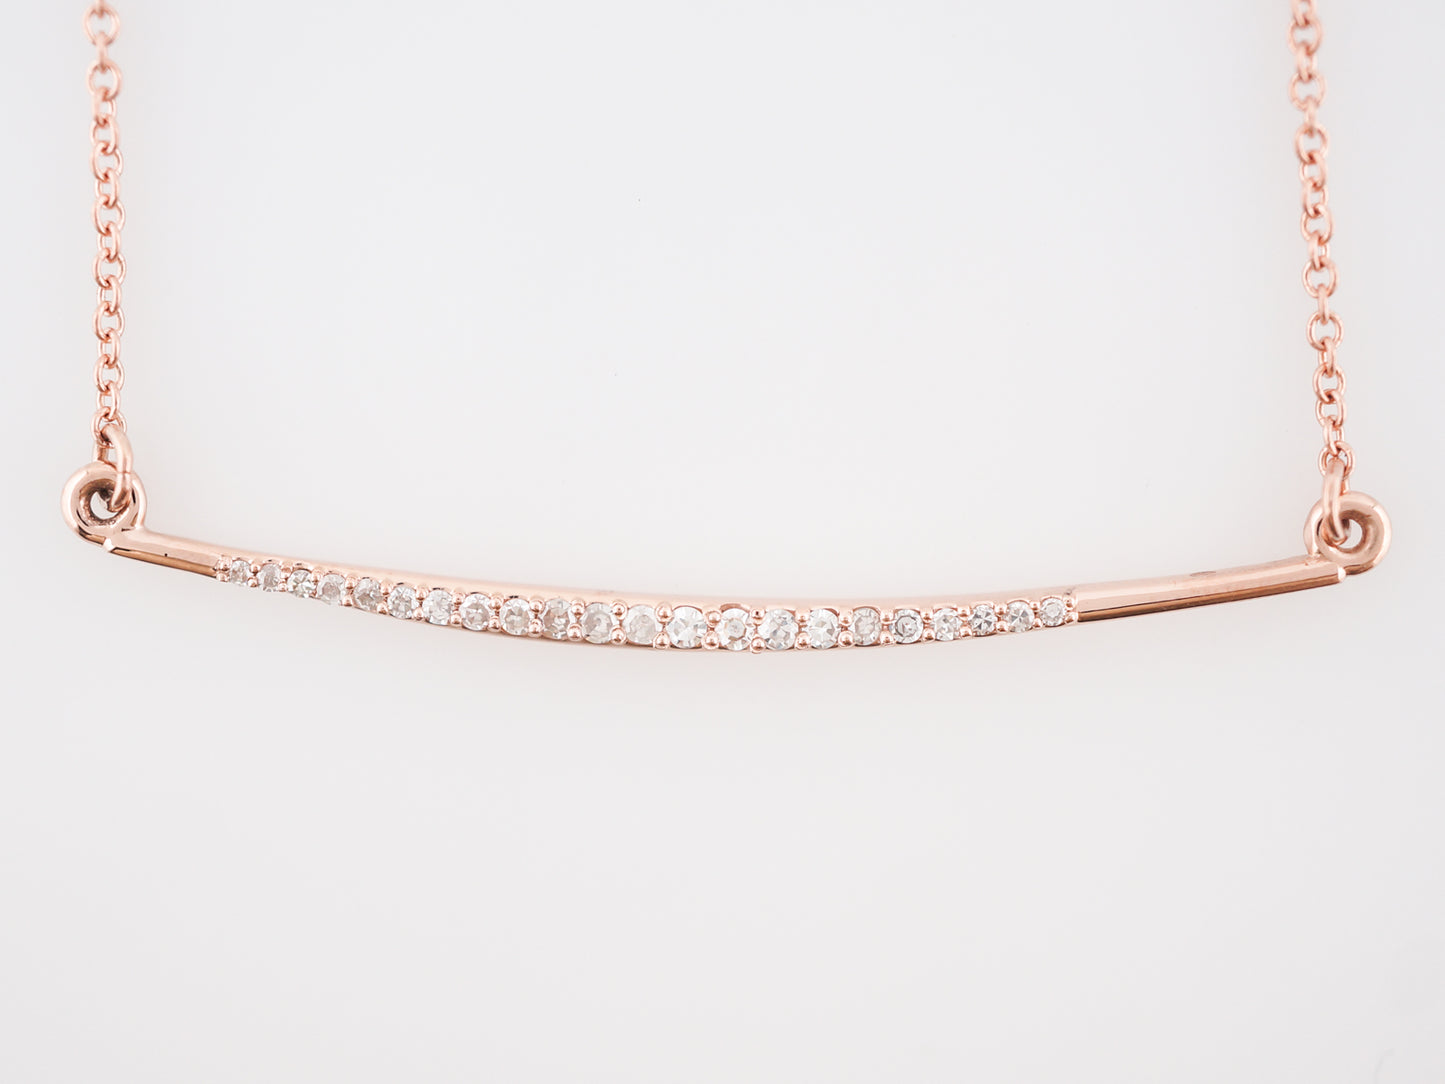 Bar Necklace Modern .12 Single Cut Diamond in 14K Rose Gold